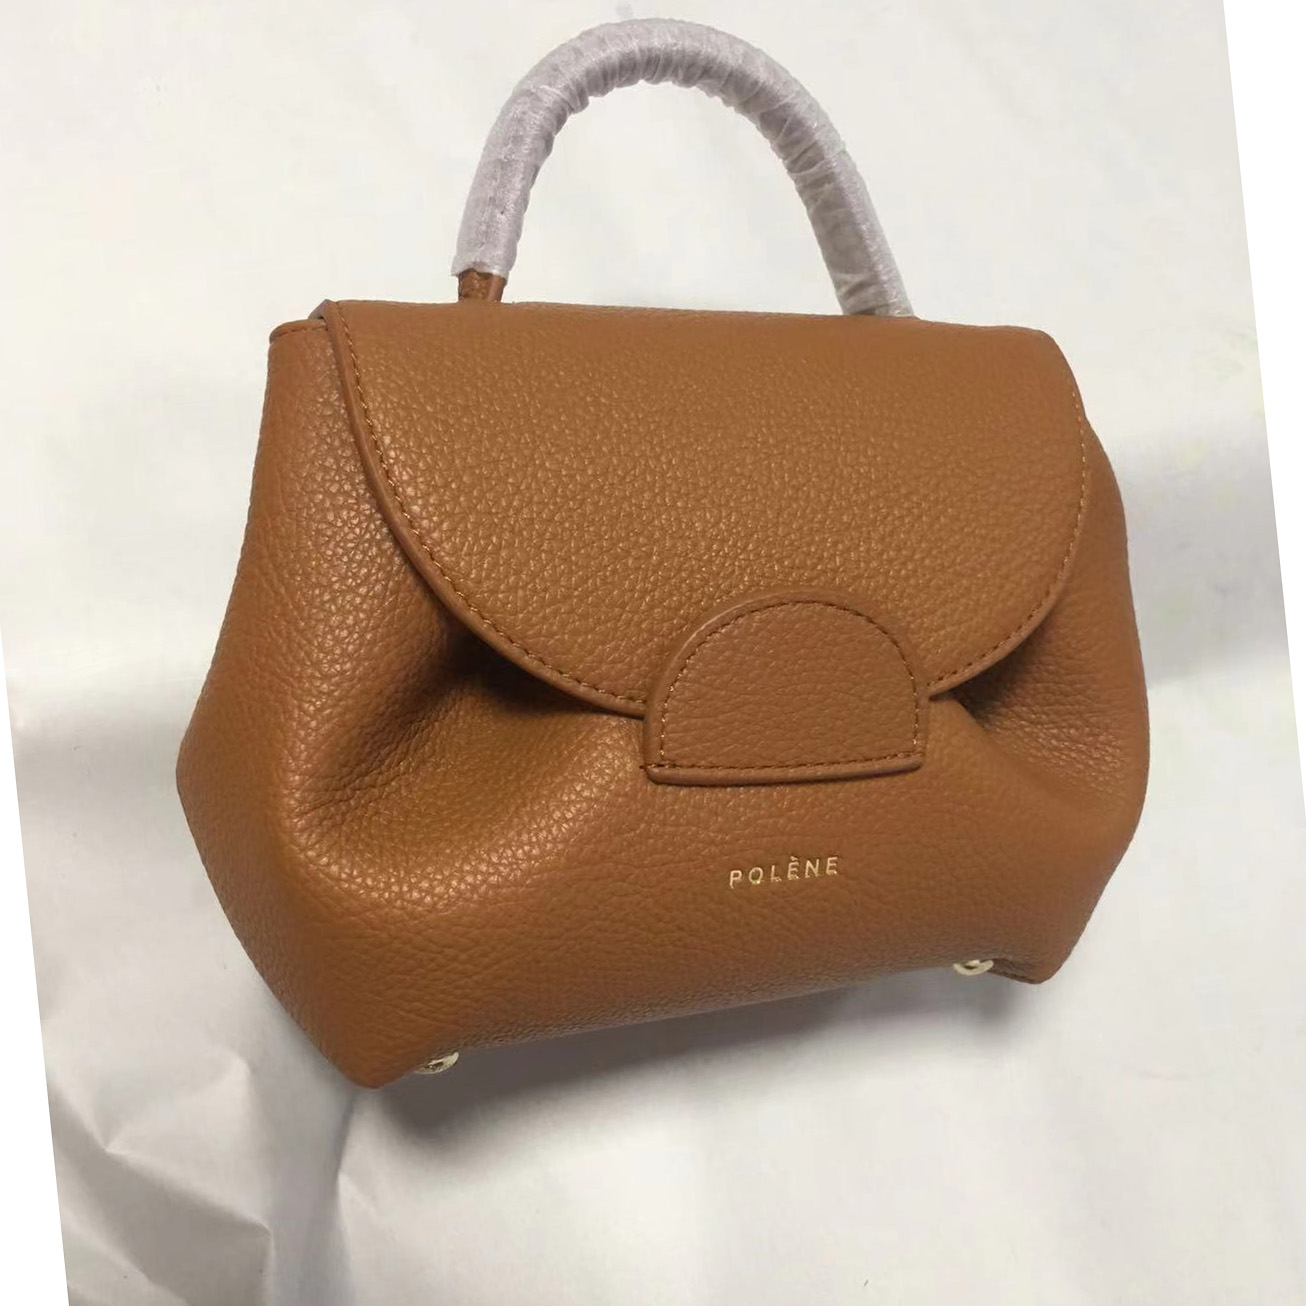 Polene Leather Handbag  - everydesigner